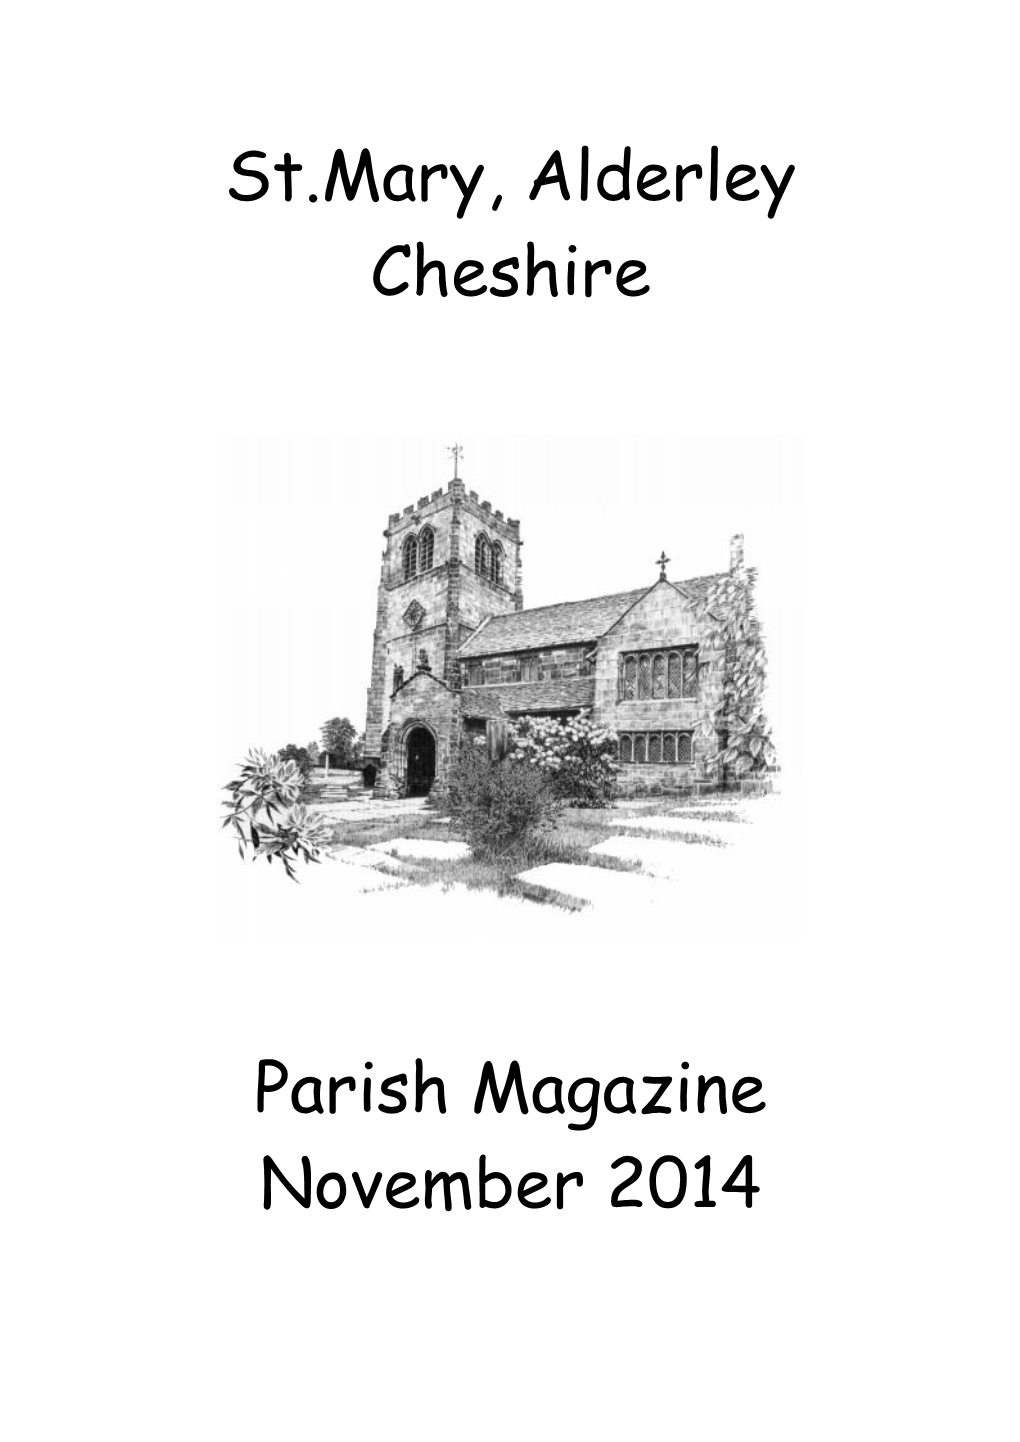 St.Mary, Alderley Cheshire Parish Magazine November 2014